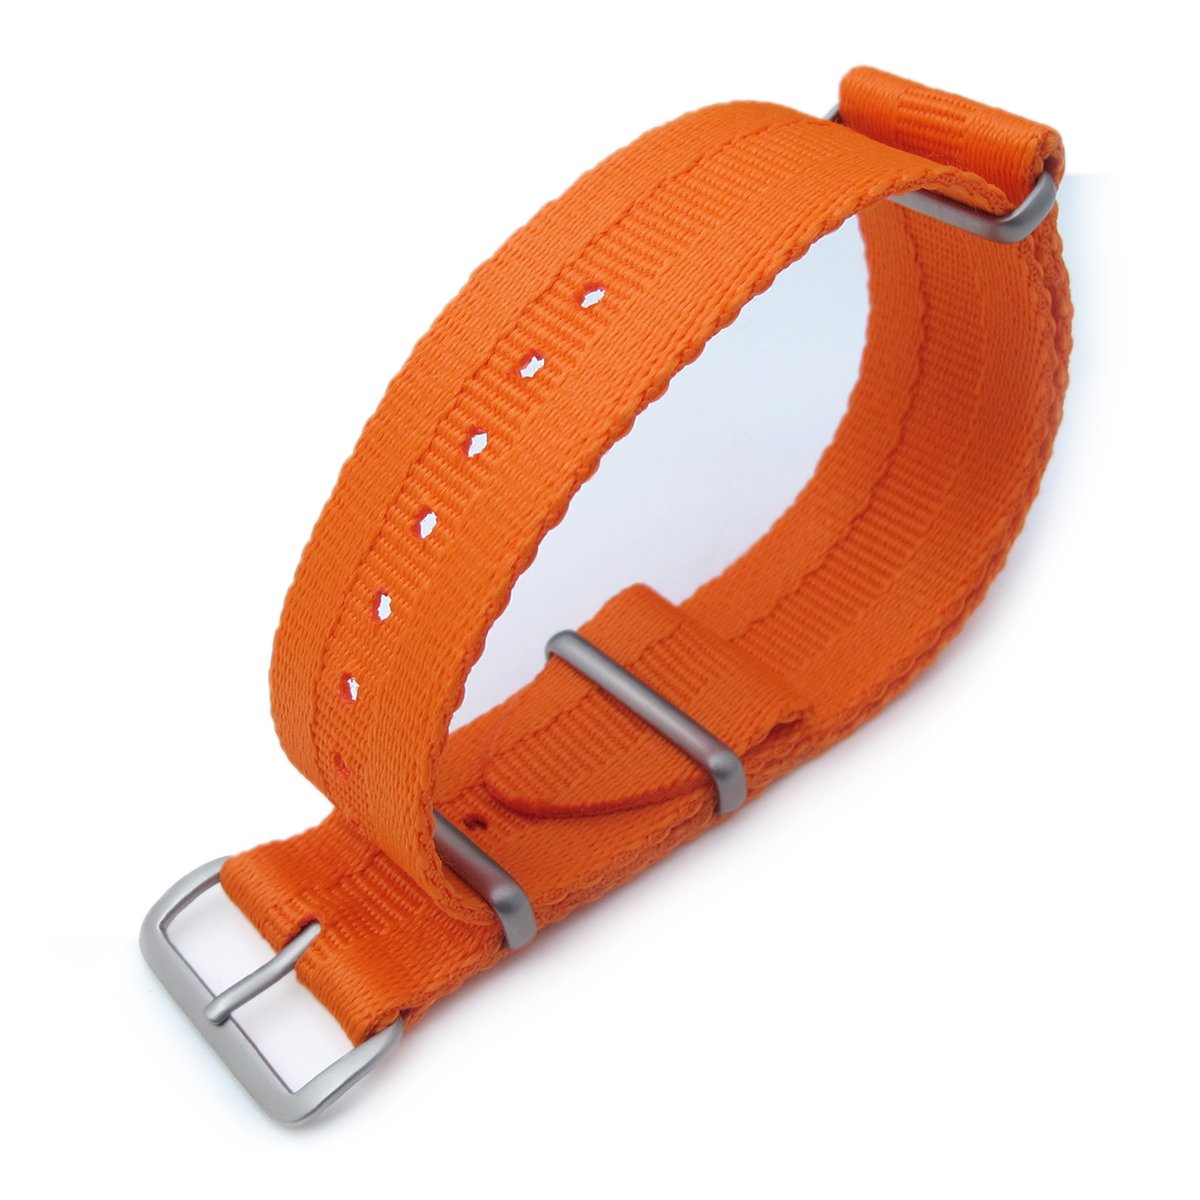 MiLTAT 22mm G10 Military NATO Watch Strap Sandwich Nylon Armband Brushed Orange Strapcode Watch Bands